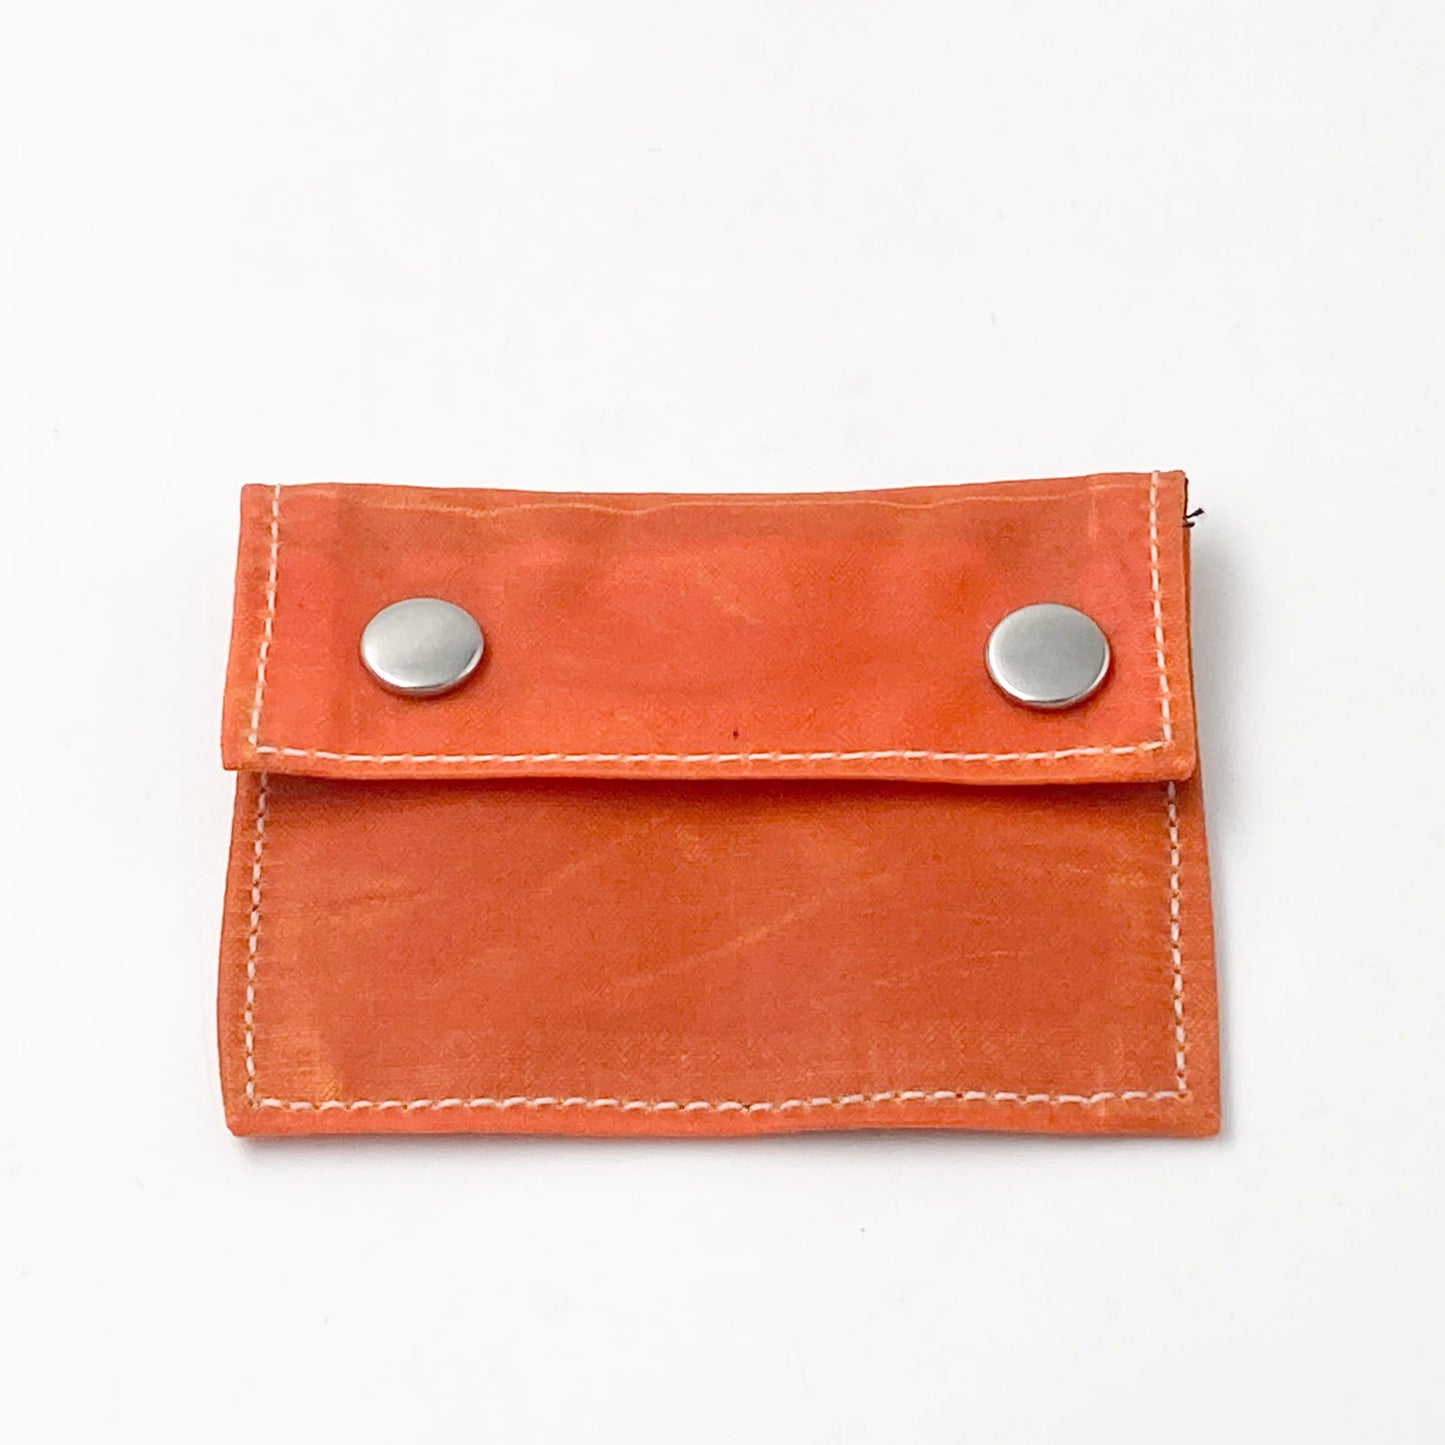 purse - traditional oilskin orange